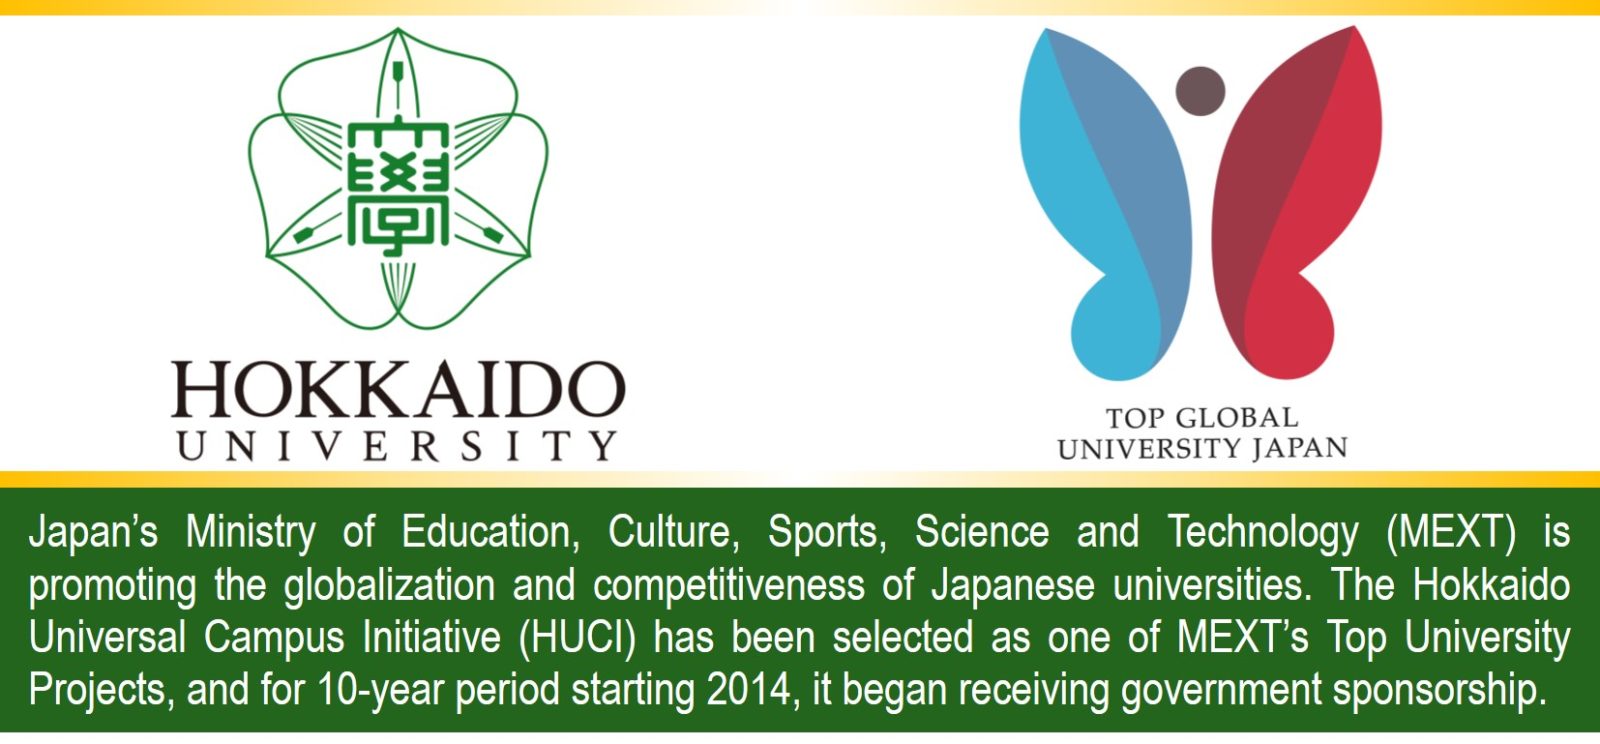 Hokkaido Universal Campus Initiative (HUCI)